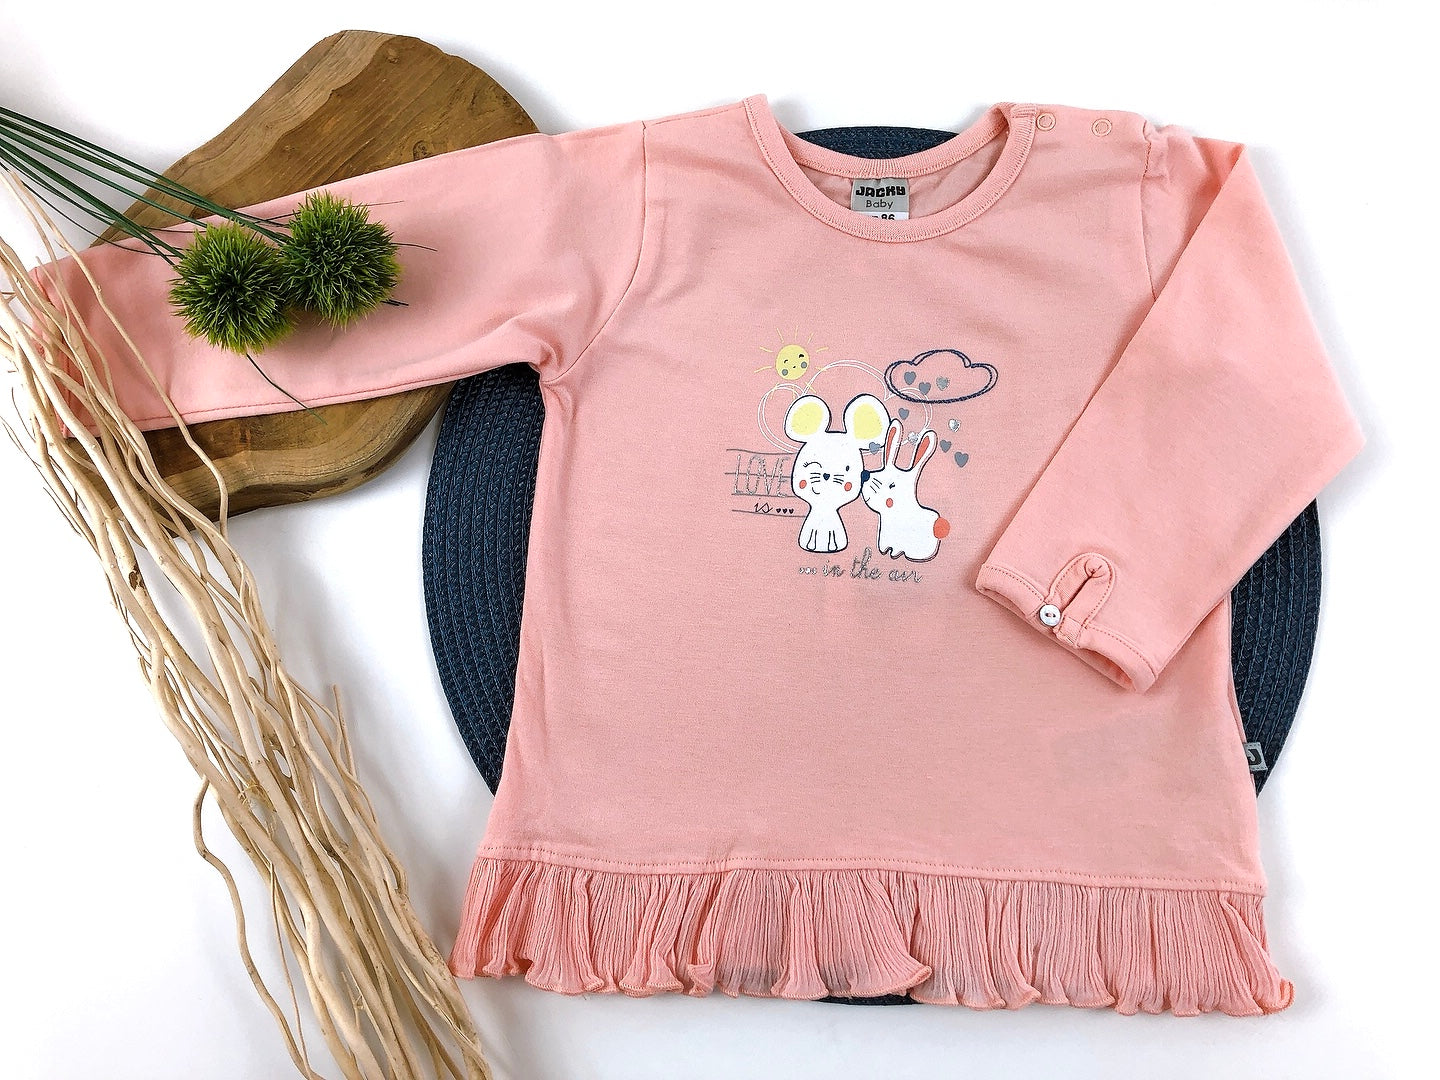 Jacky Baby Langarm-Shirt, Gr. 86, rosa